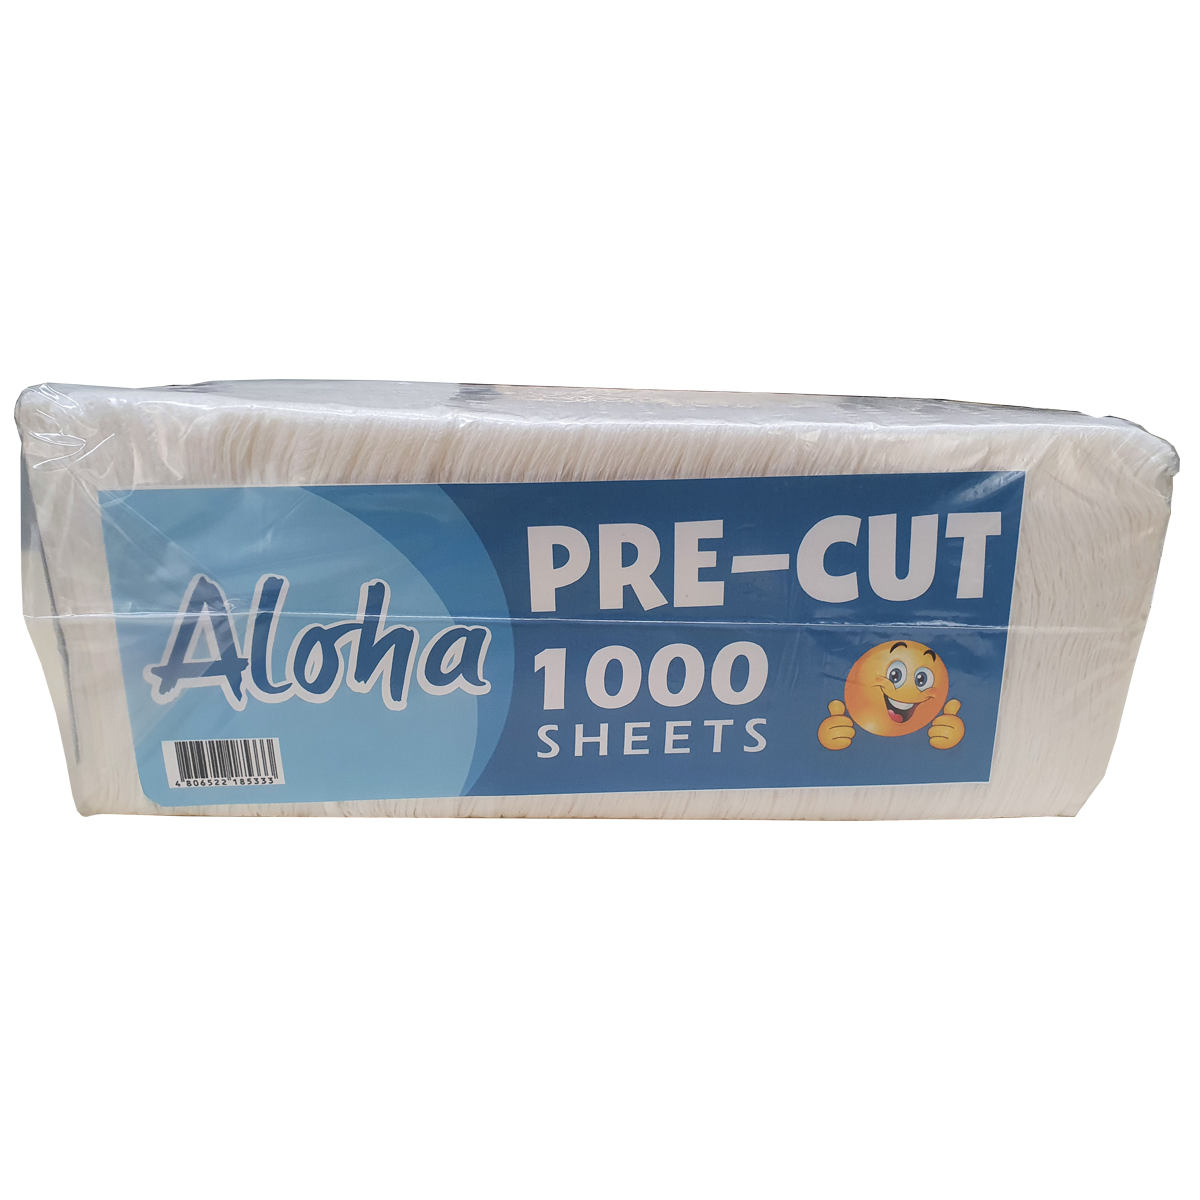 Aloha Pre-Cut Table Napkin 1000 sheets